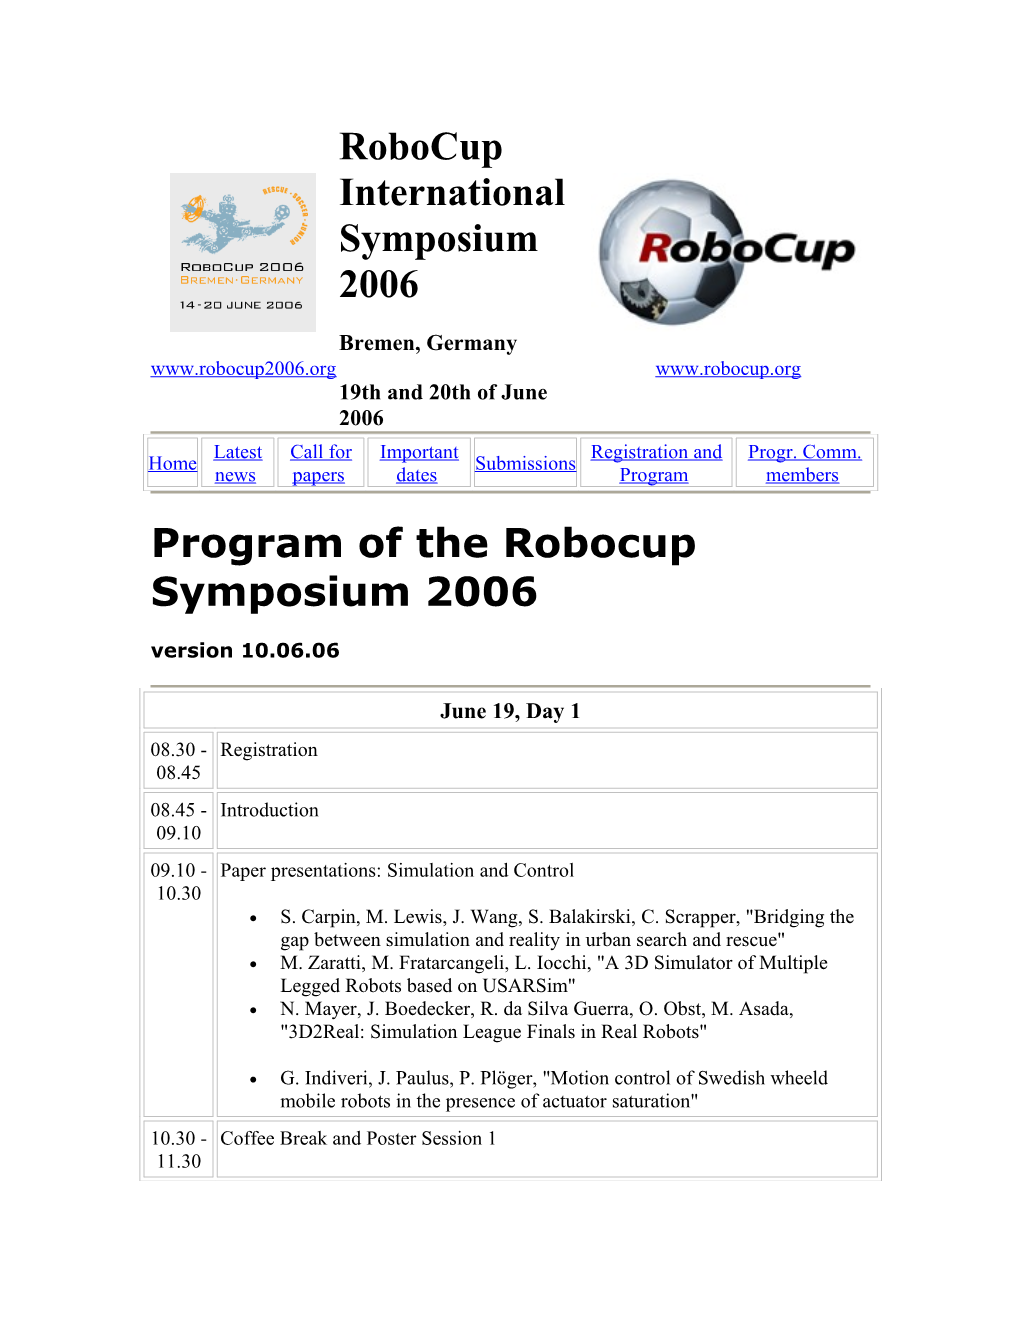 Program of the Robocup Symposium 2006